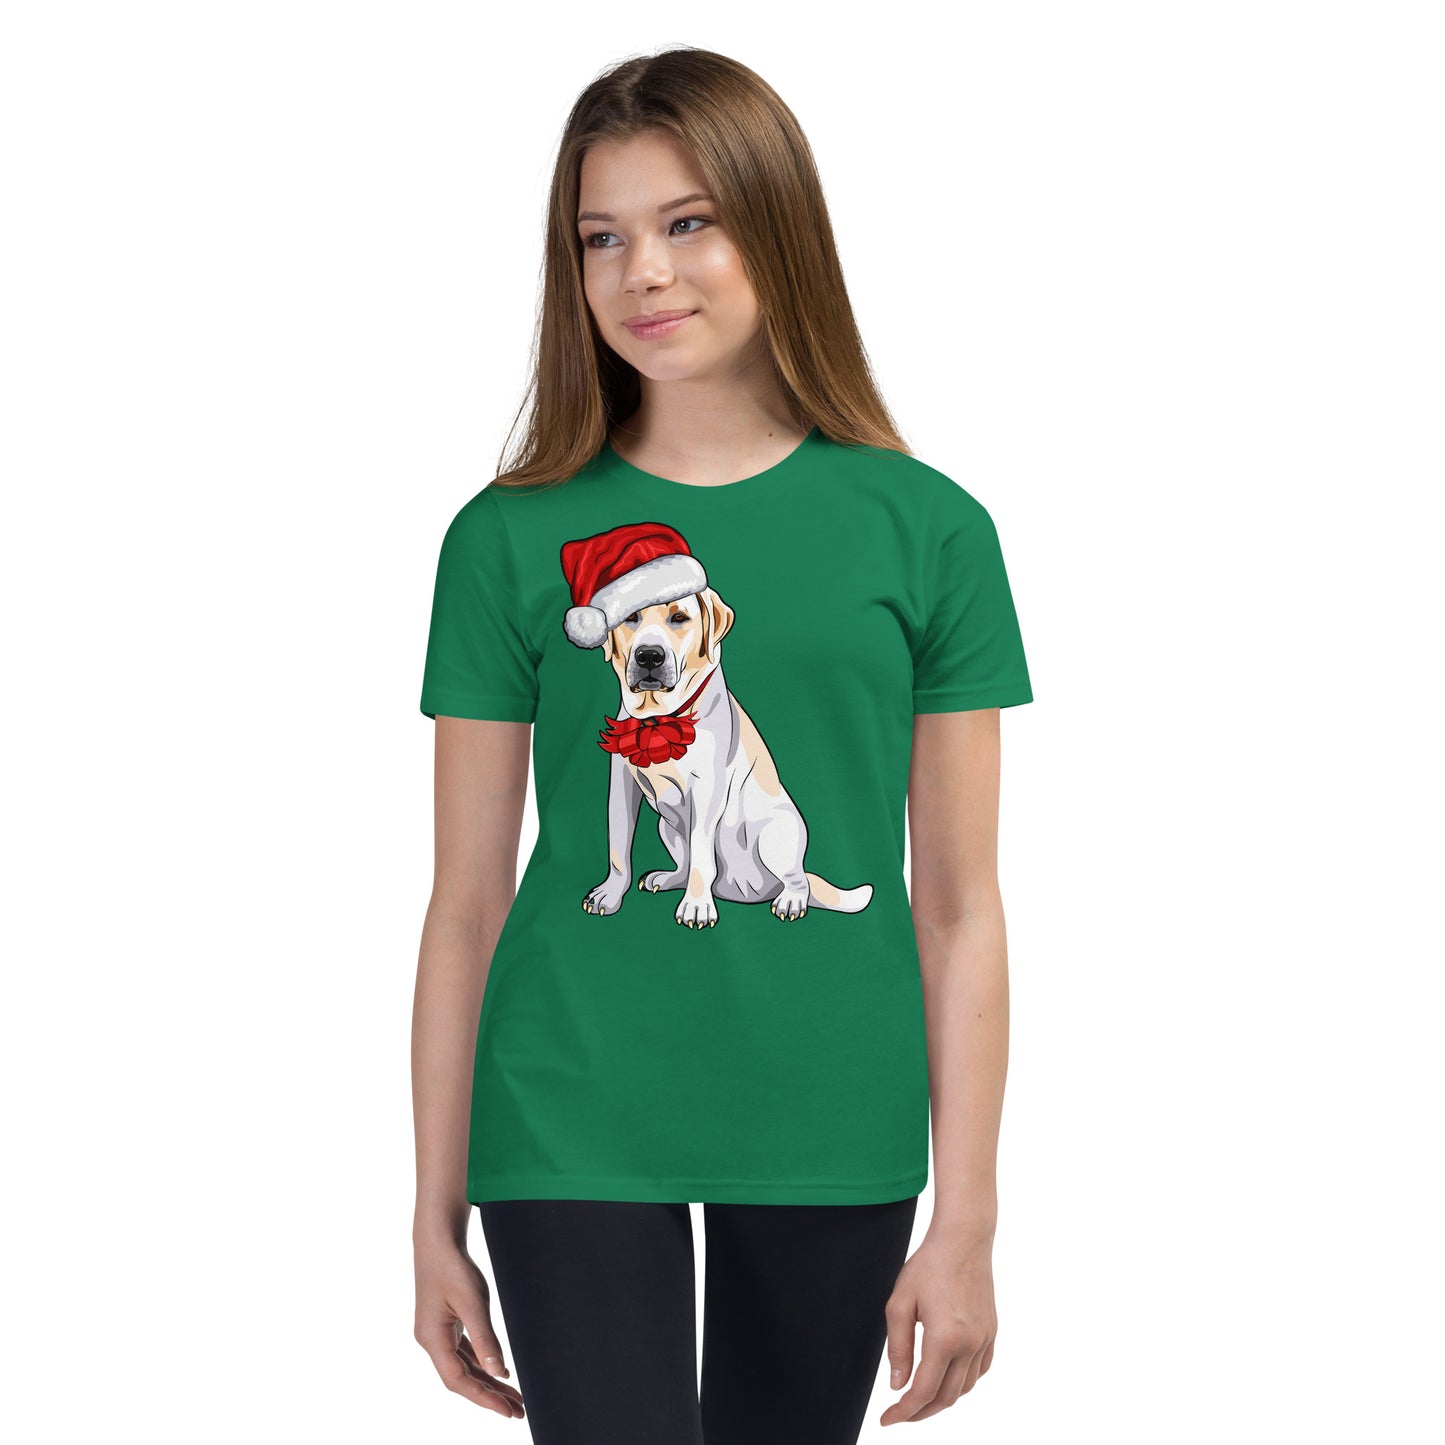 Cool Dog Wearing Santa Claus Hat T-shirt, No. 0062